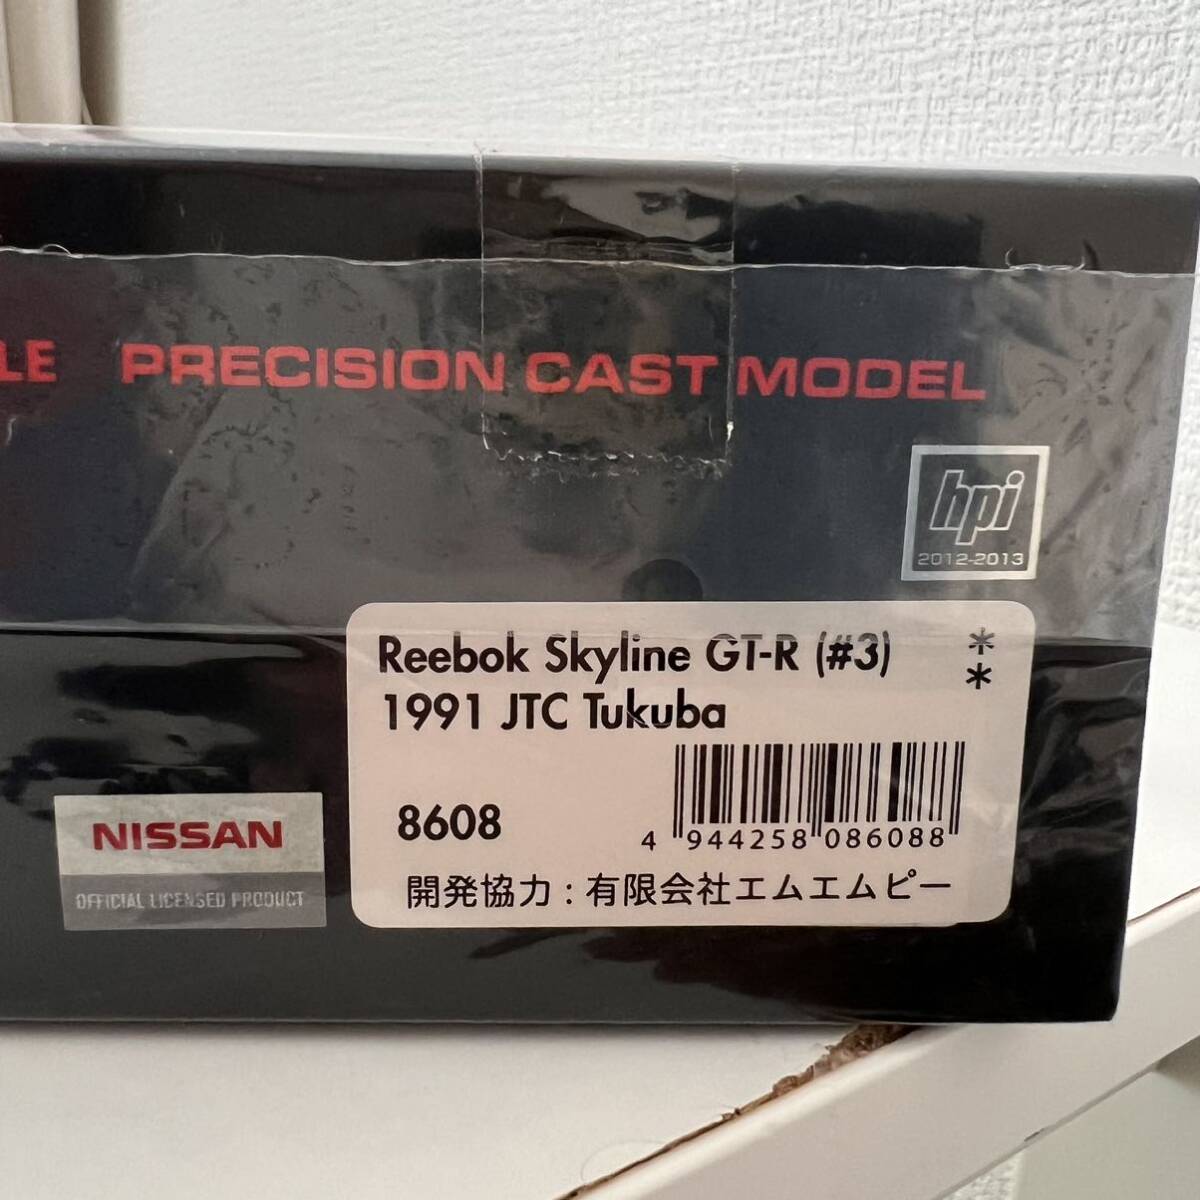  не использовался HPI NISSAN Reebok Skyline GT-R (#3) 1991 JTC Tukuba 8608 миникар 1/43 шкала 